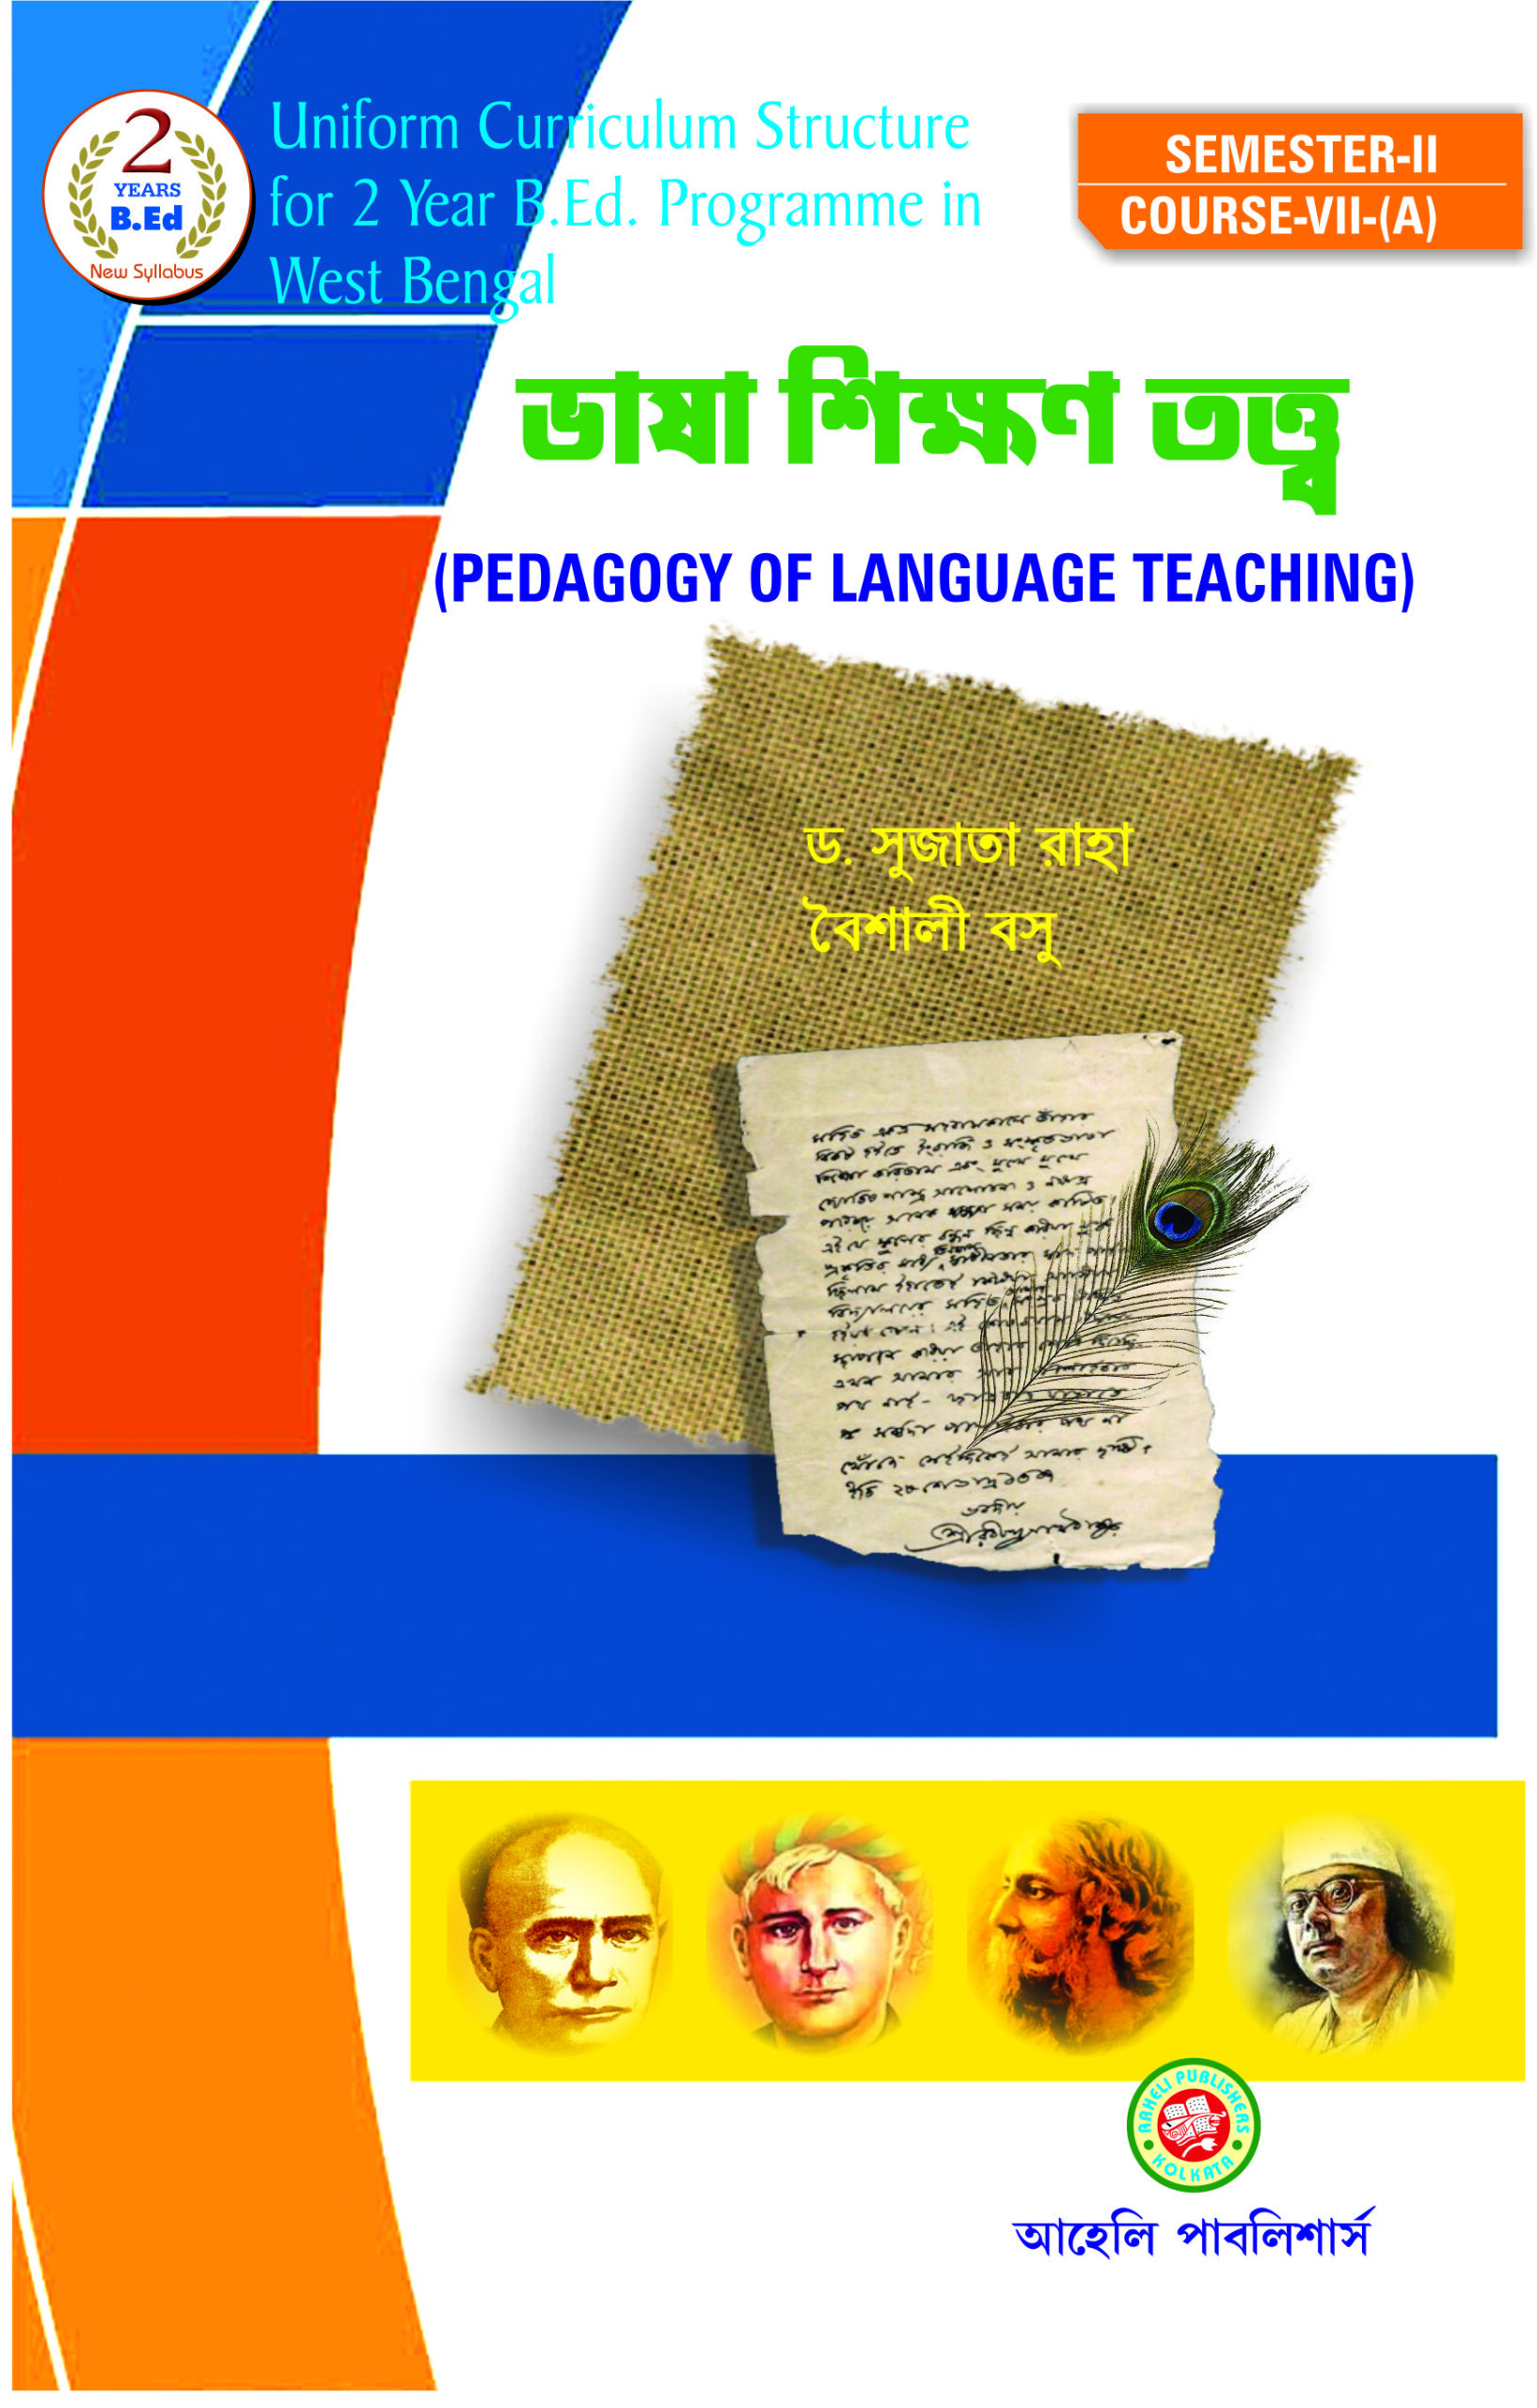 Bhasa sikkhon Twatto (Pedagogy of Language Teaching-Bengali) 2nd sem